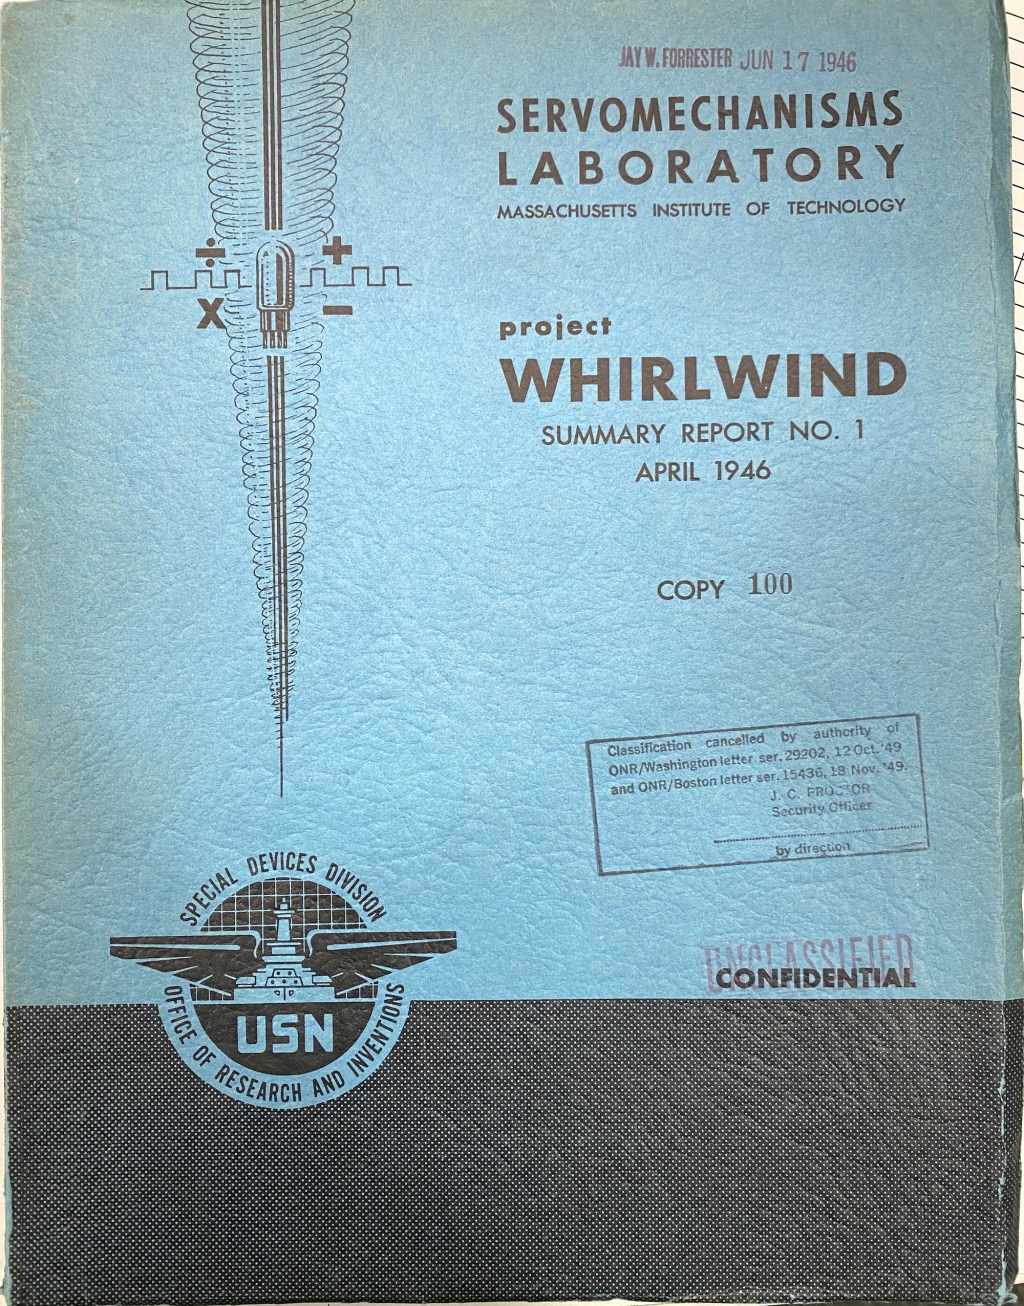 Whirlwind Summary Report No. 1, 1946